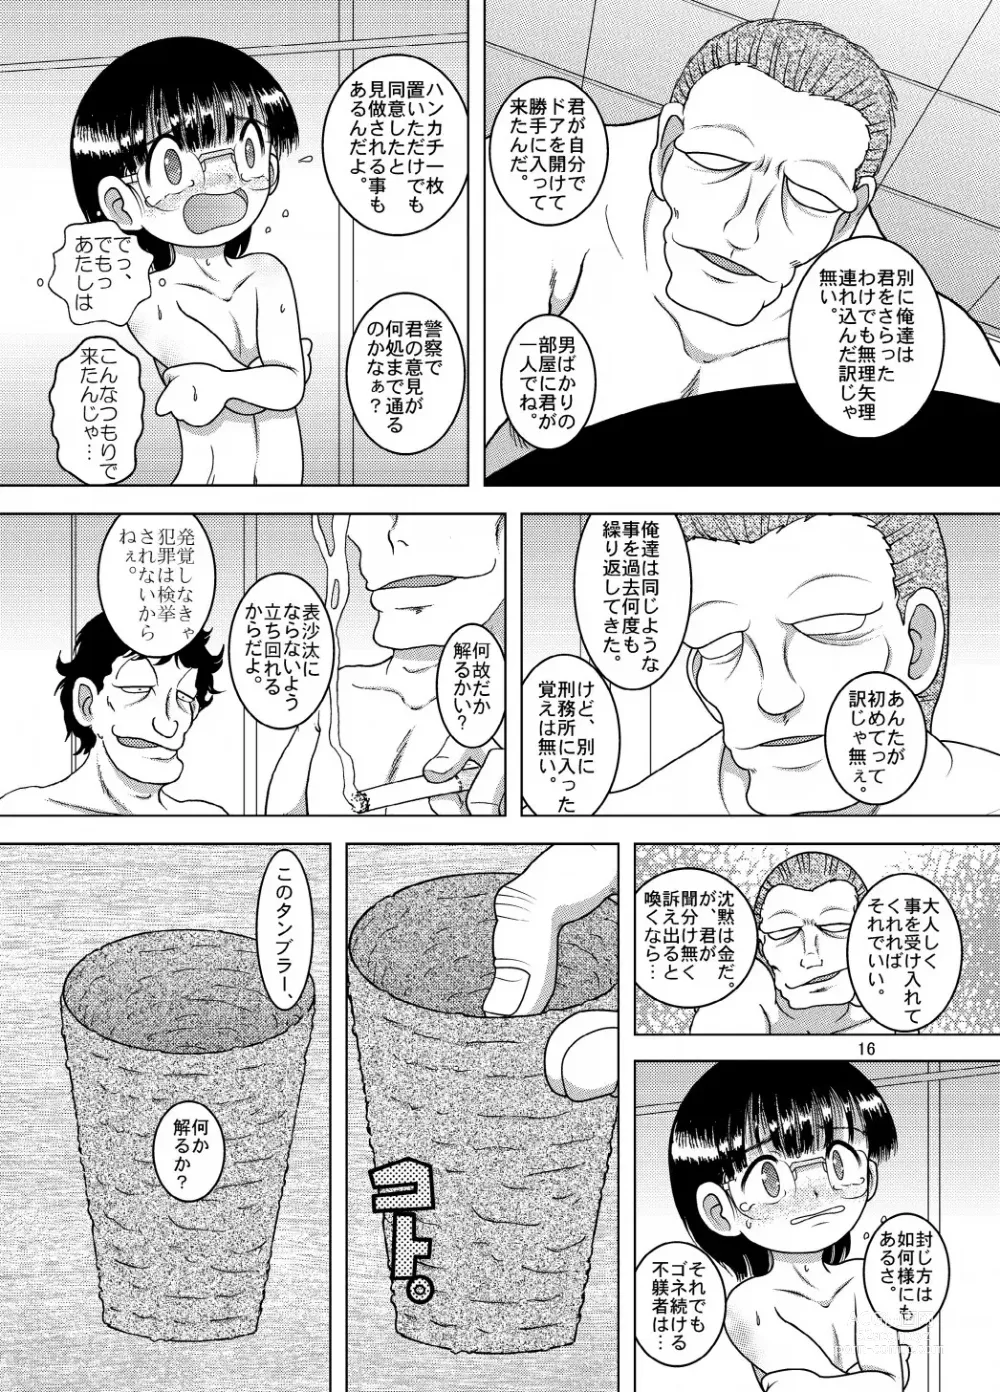 Page 16 of doujinshi Denha Amakan